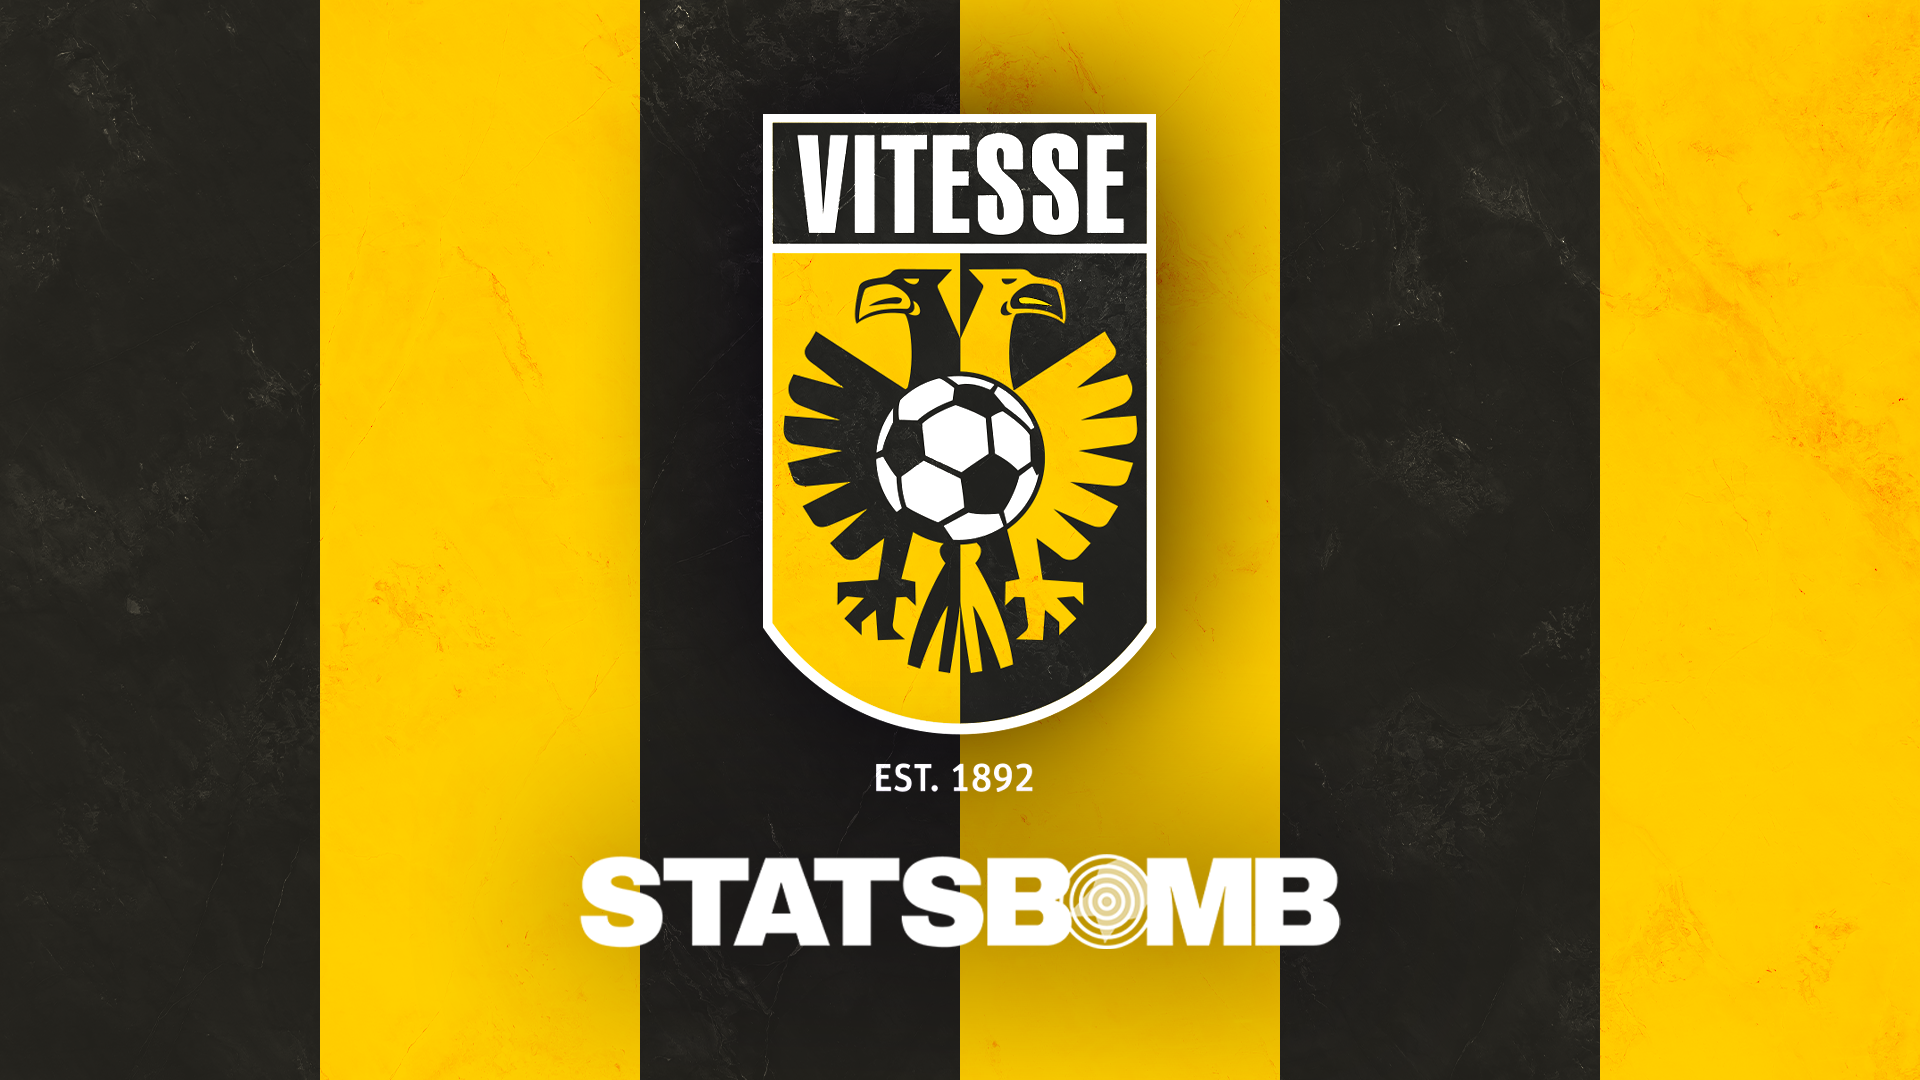 StatsBomb sign partnership agreement with Vitesse Arnhem